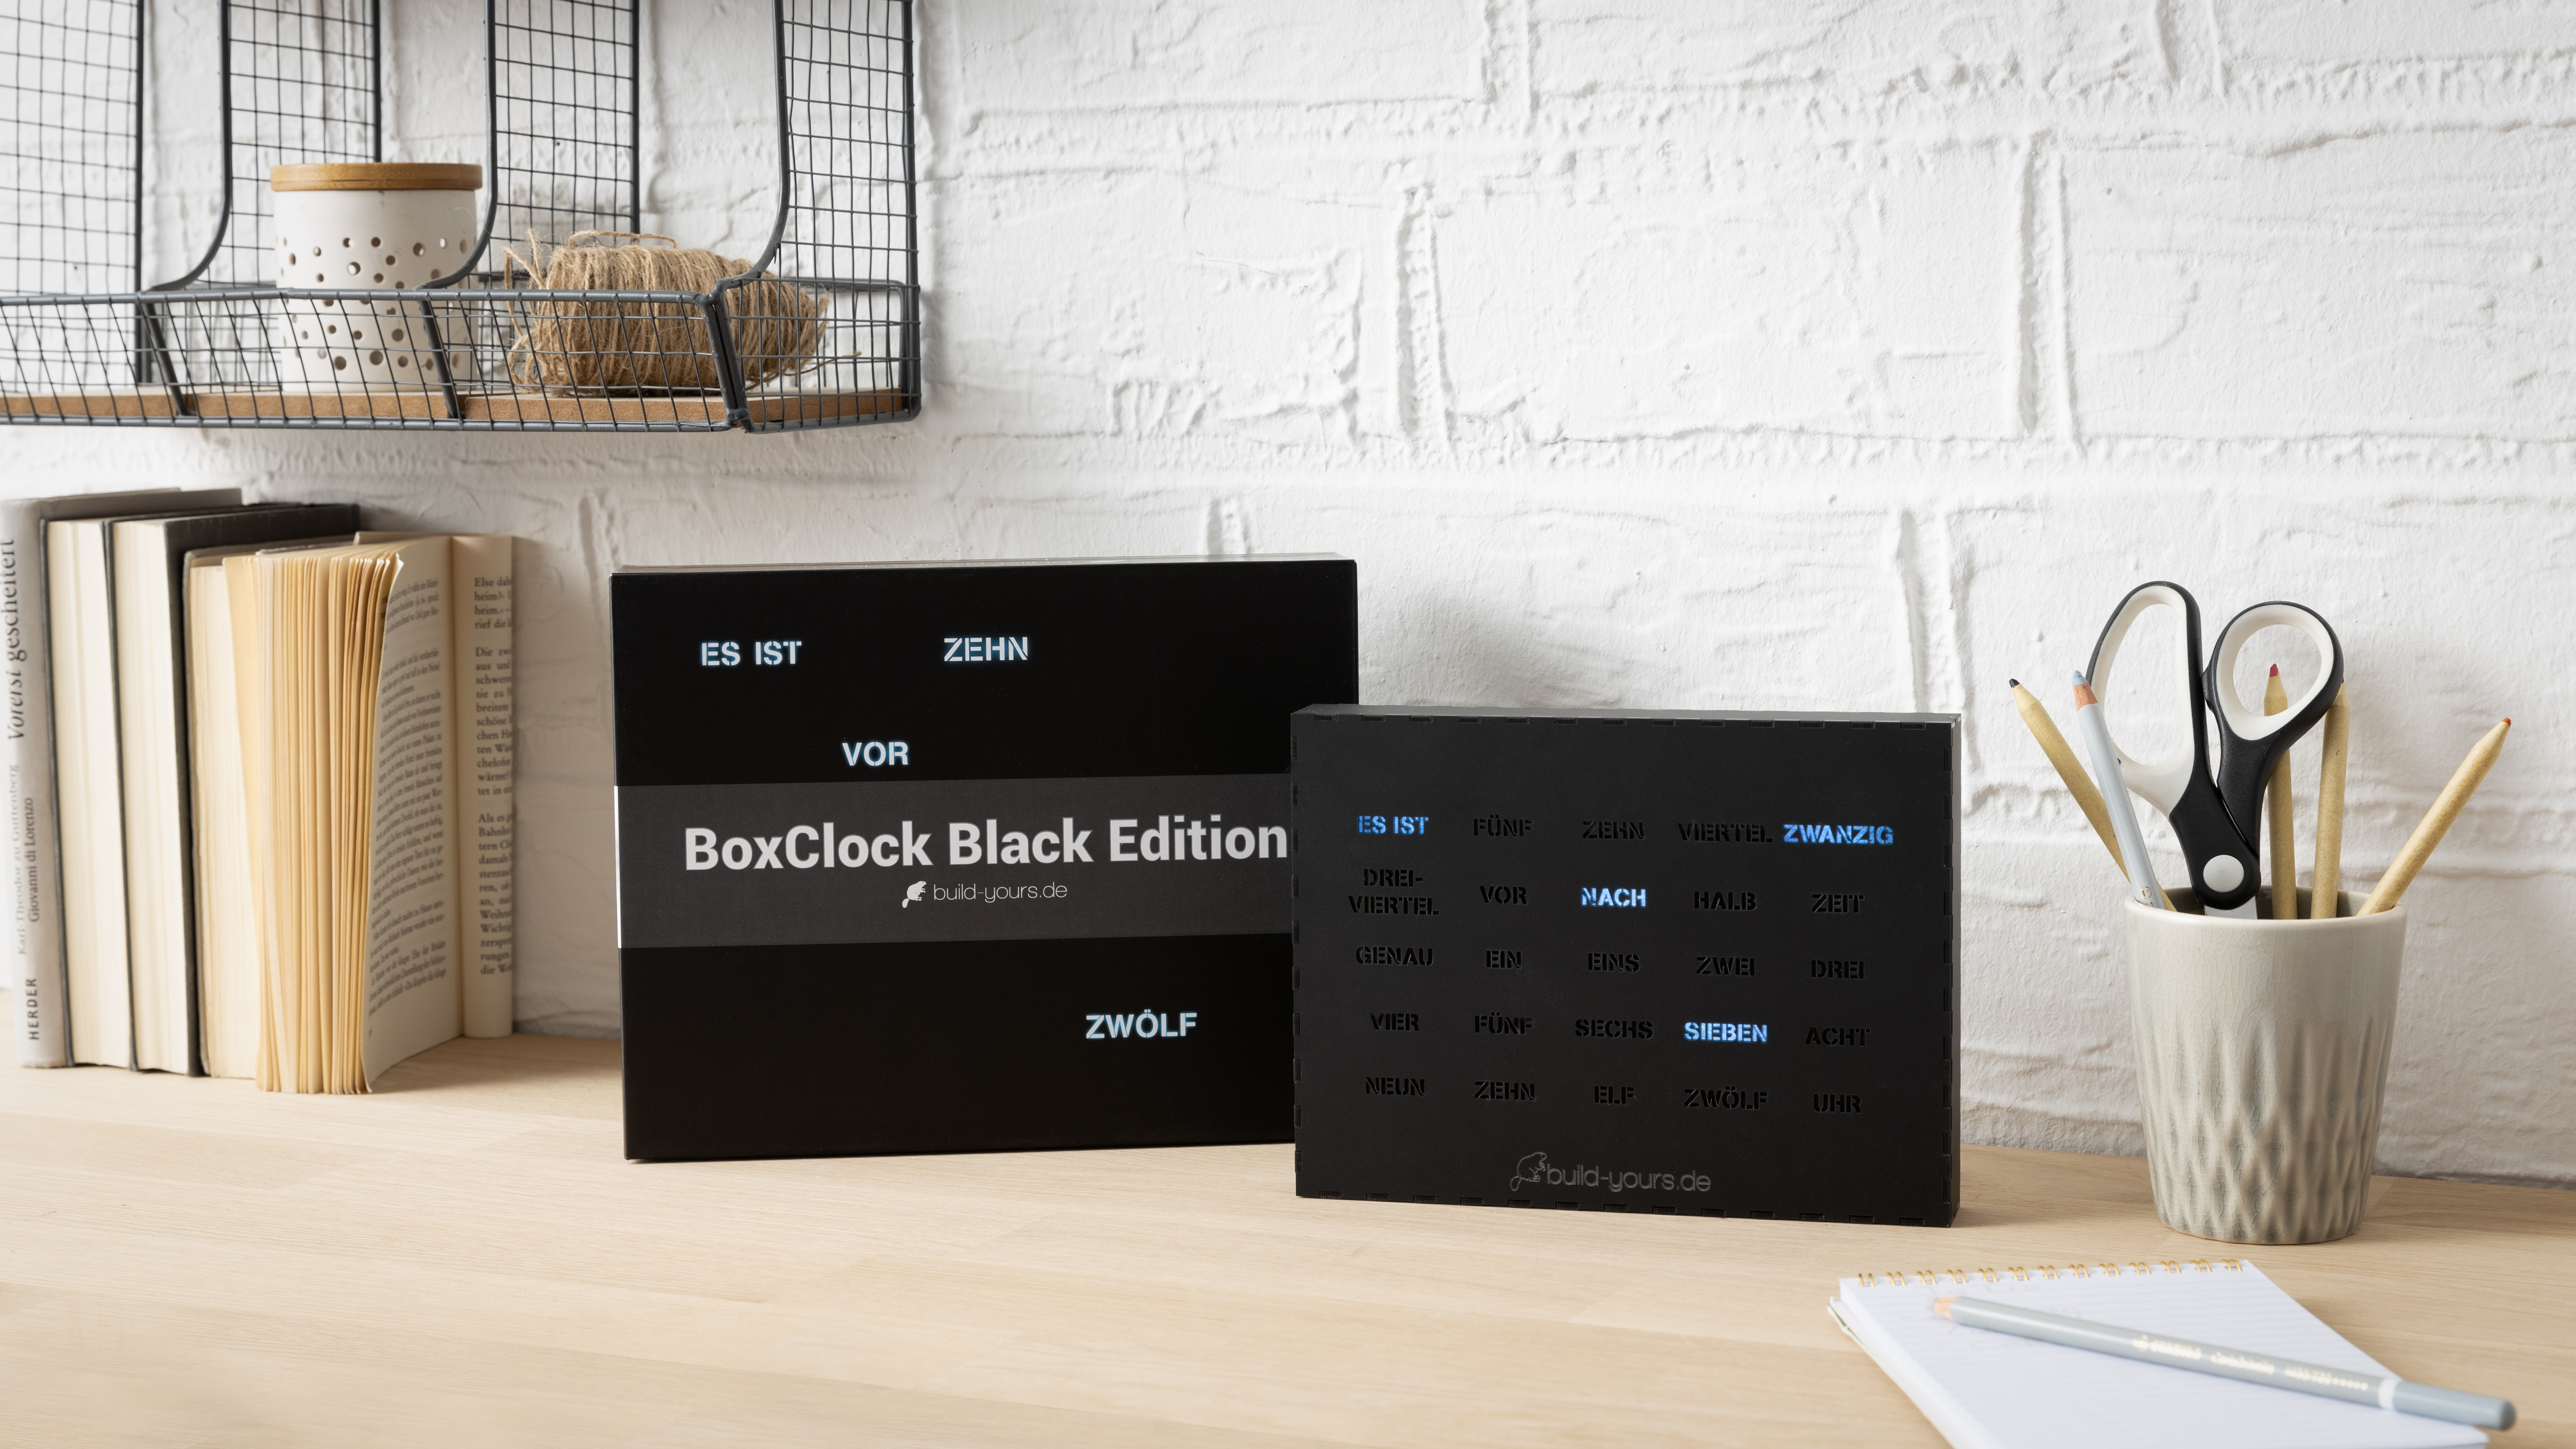 BoxClock Black Edition